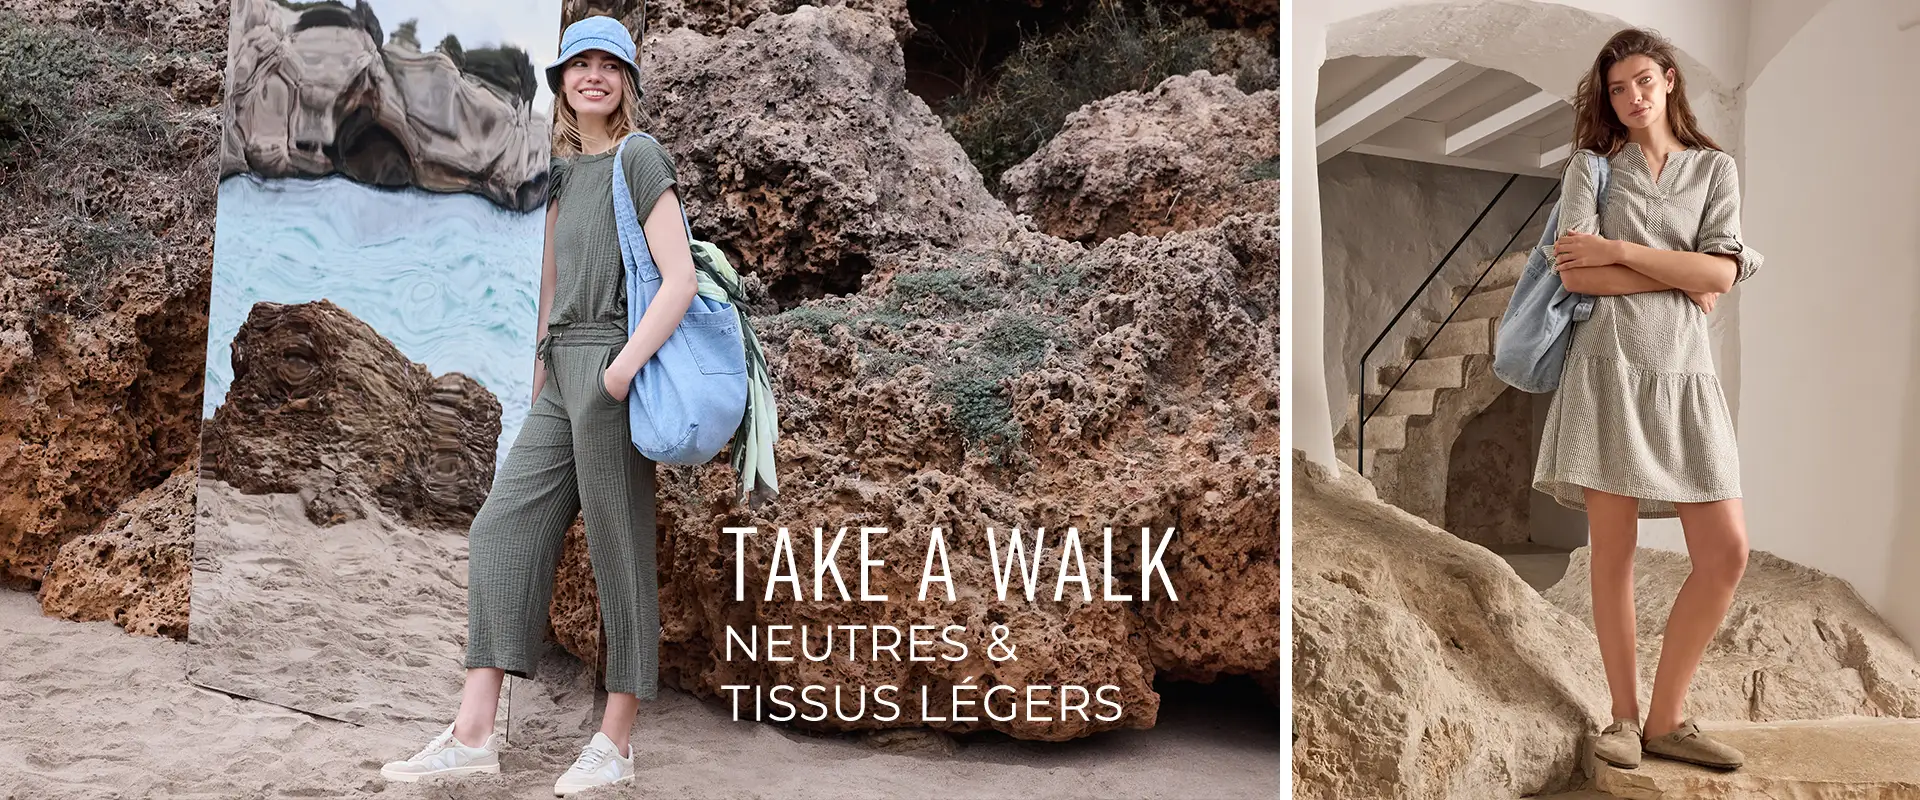 Take a Walk Neutres & Tissus légers